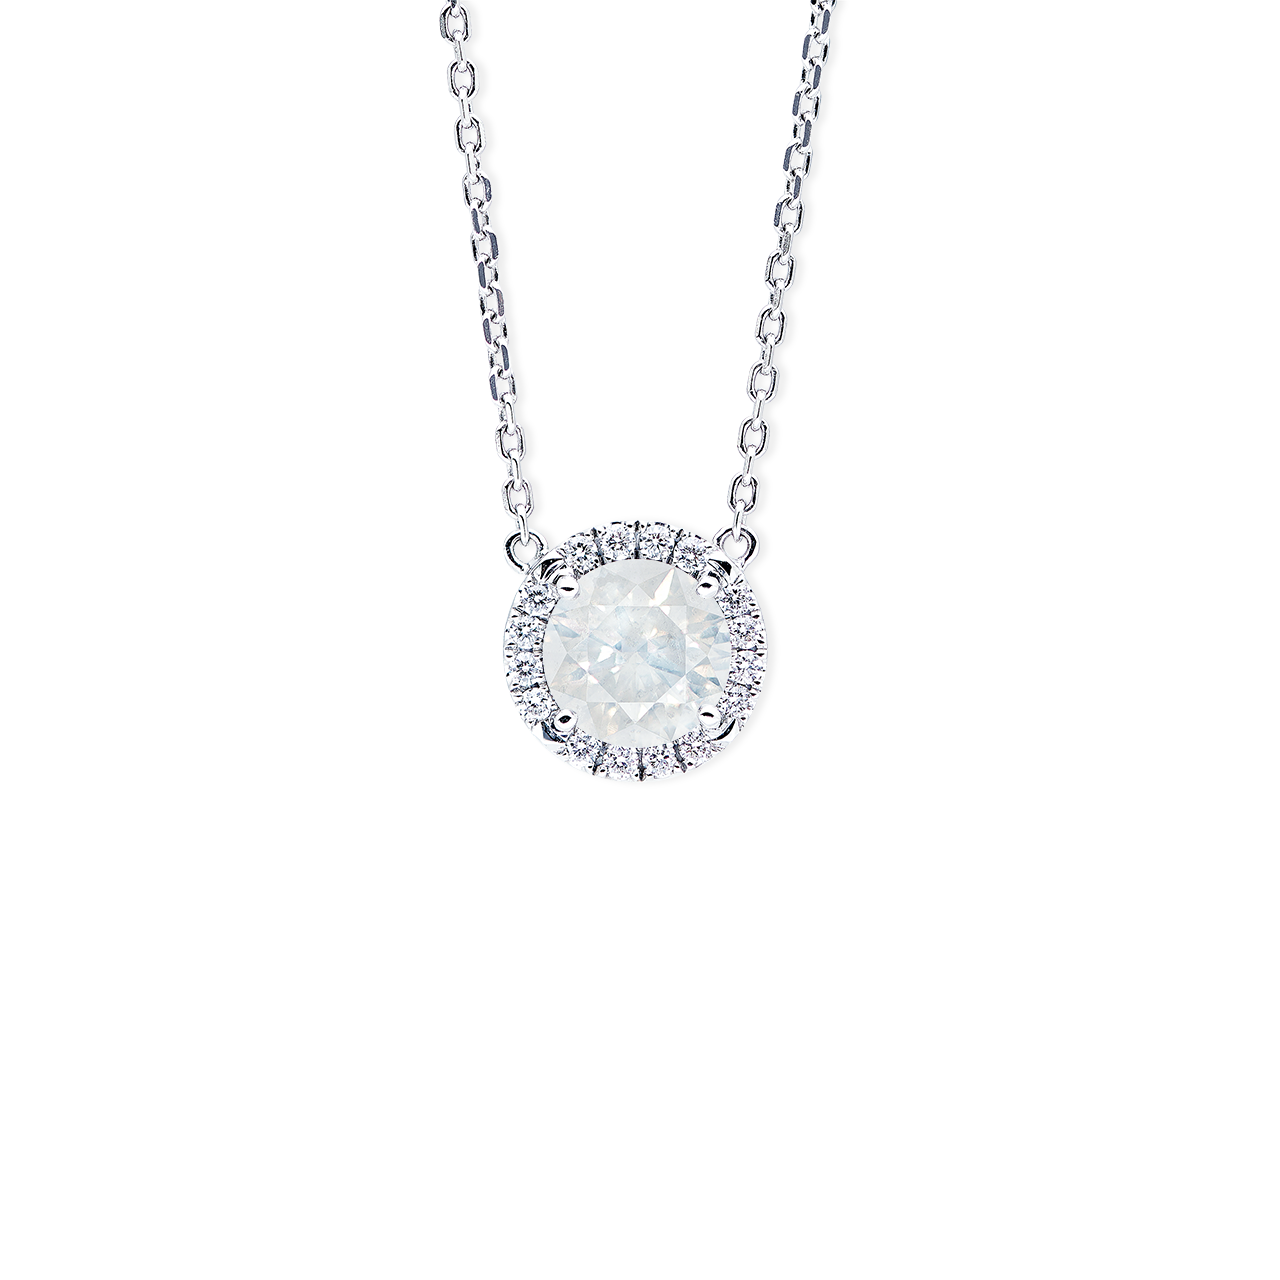 GIA 1.30克拉 奶鑽墜鍊
Fancy White Diamond Pendant Necklace